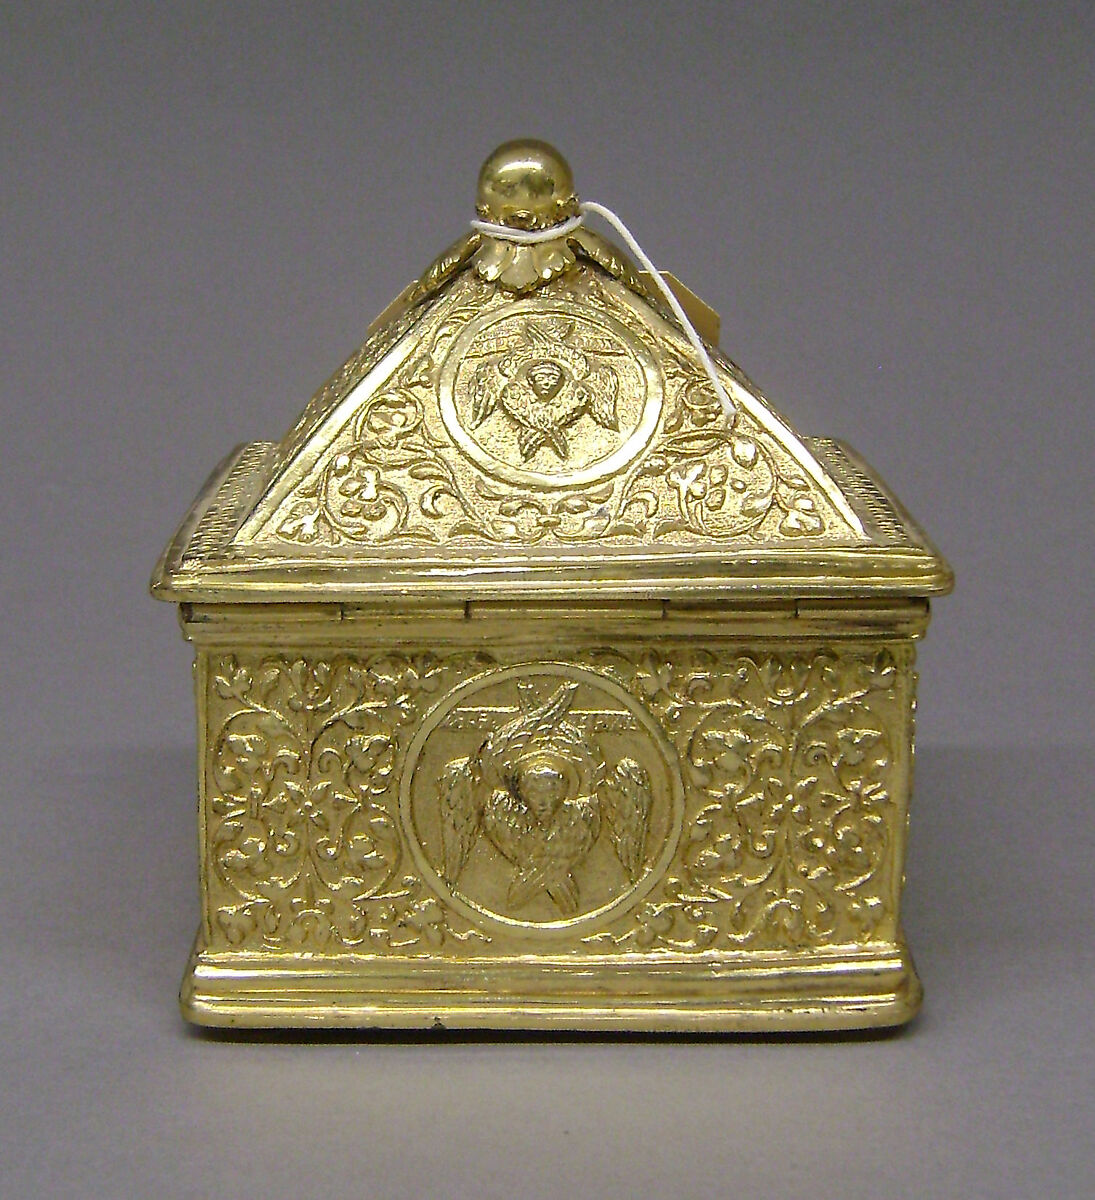 Incense box, Silver on base metal, British, after Russian original 